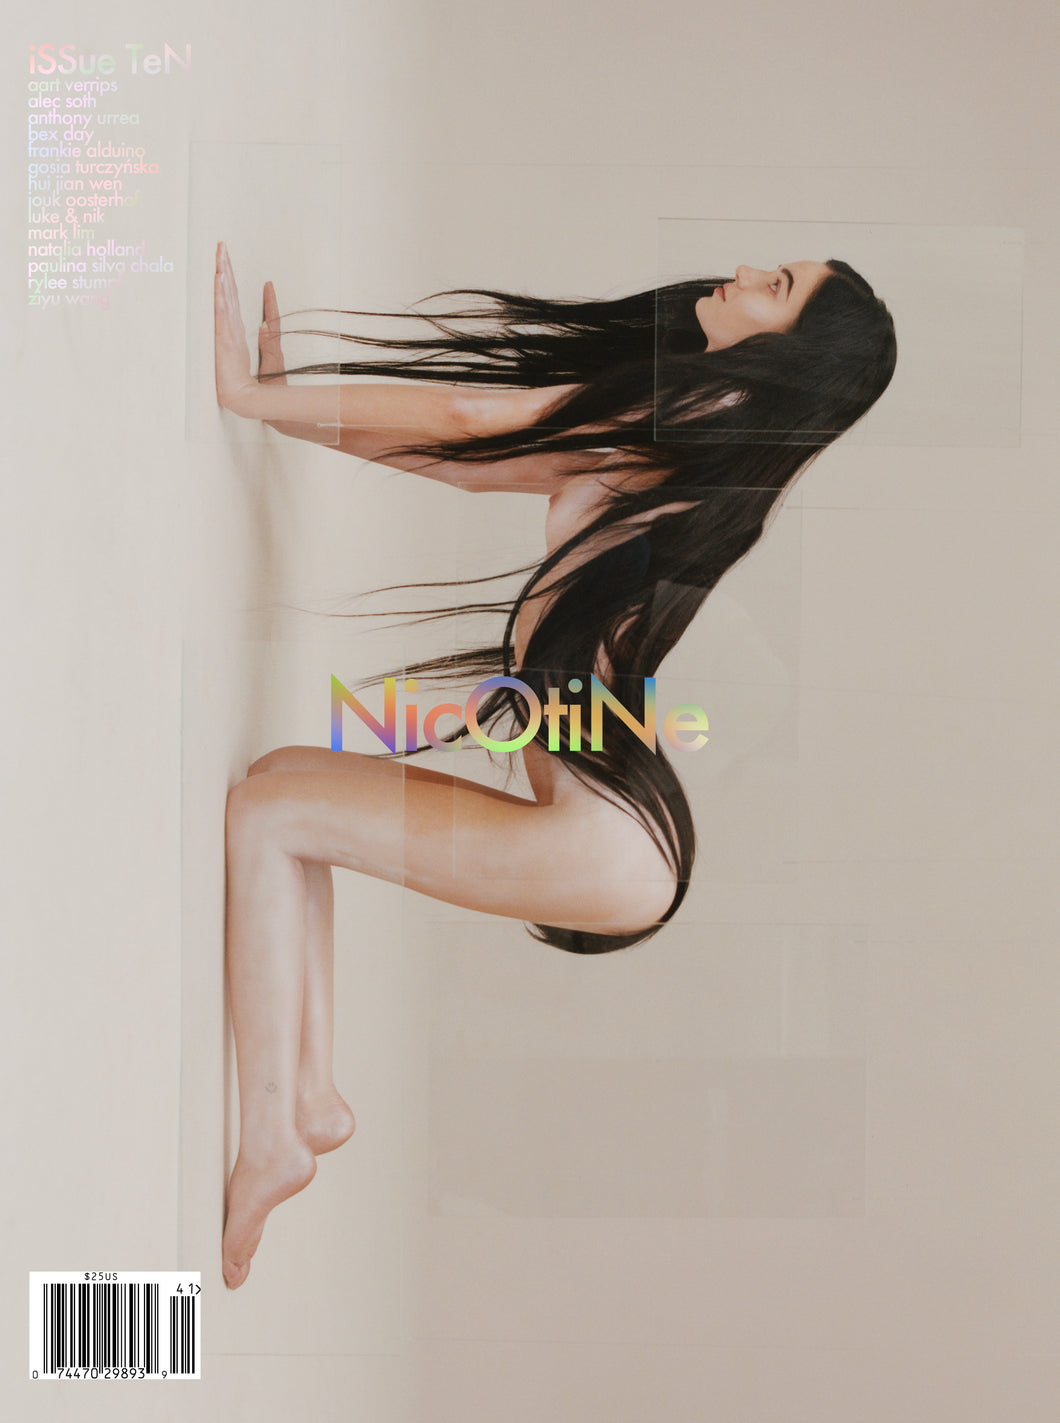 Nicotine - Issue 10